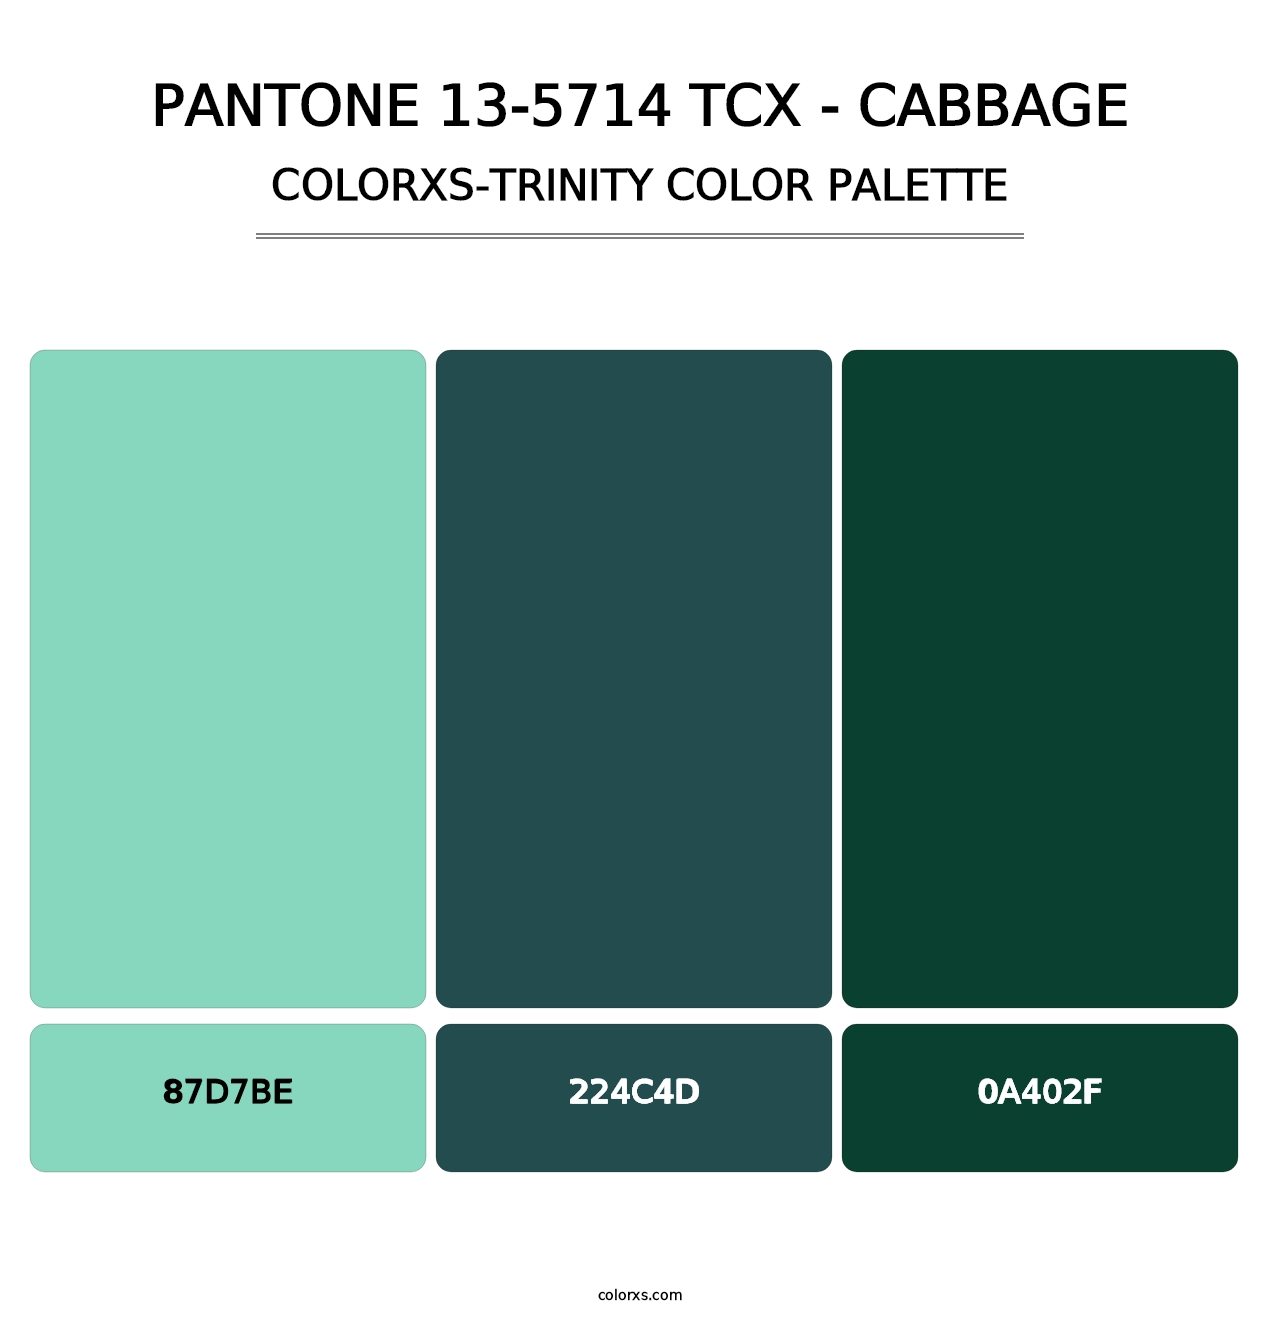 PANTONE 13-5714 TCX - Cabbage - Colorxs Trinity Palette